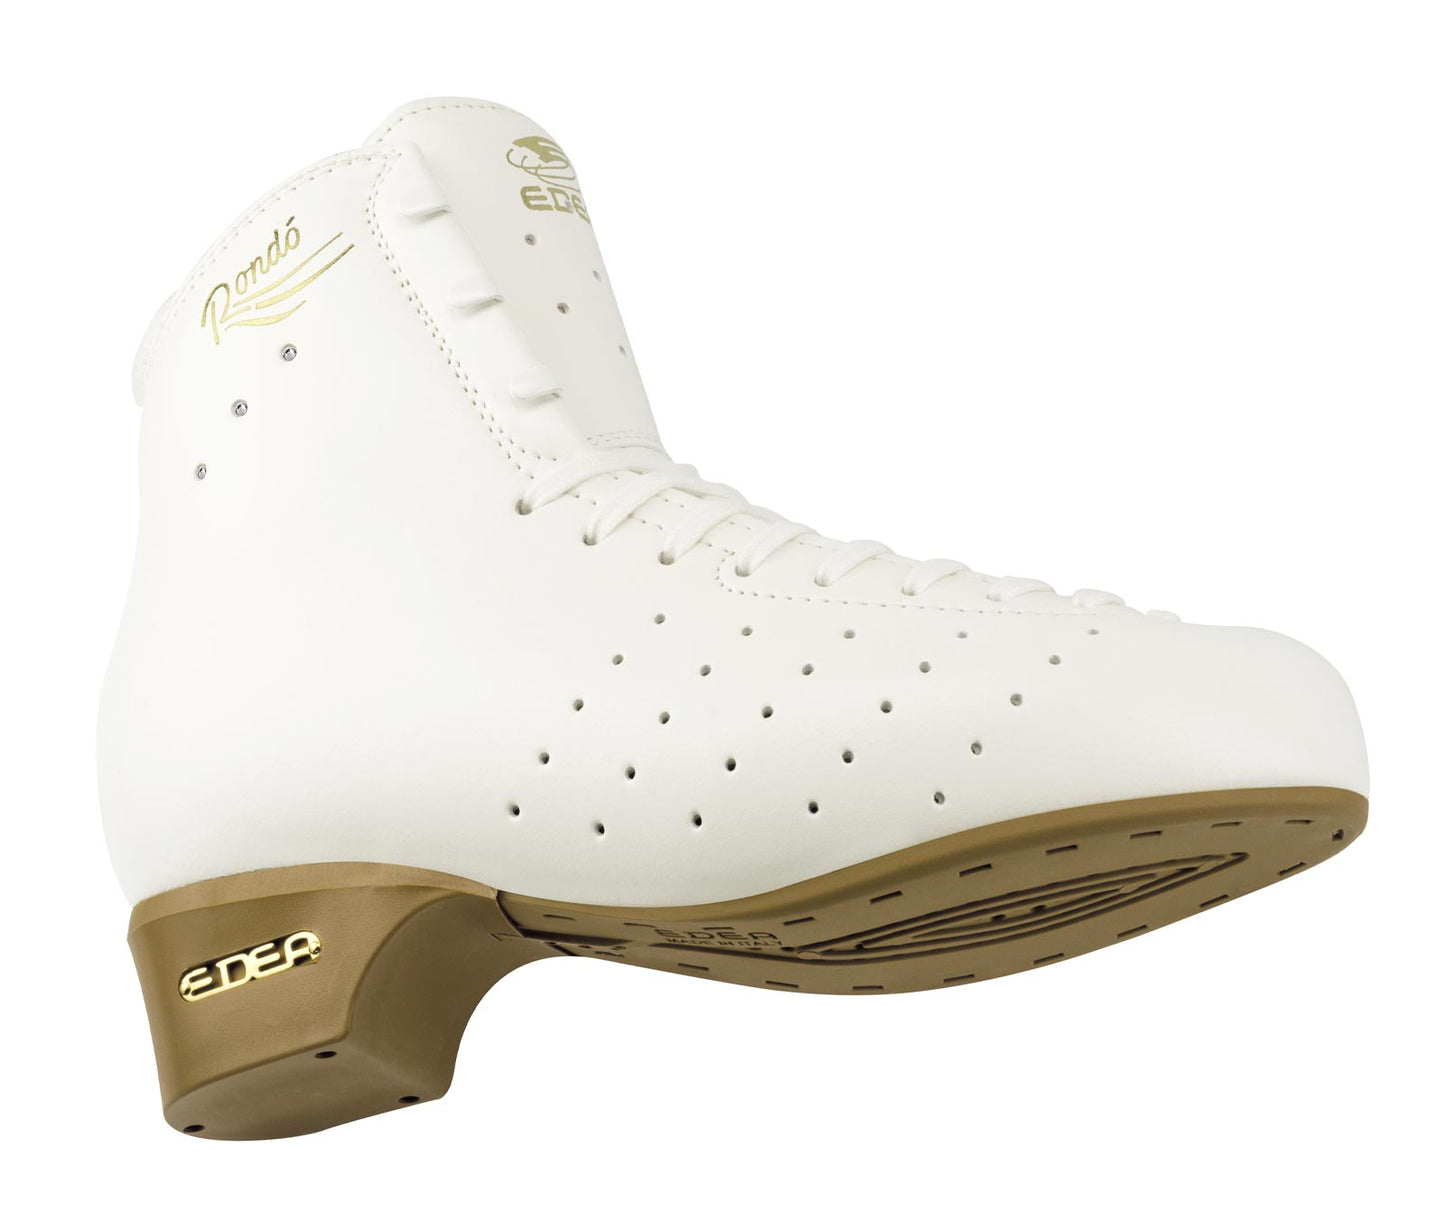 Edea RONDÓ Roller Skates Boots in White or Black